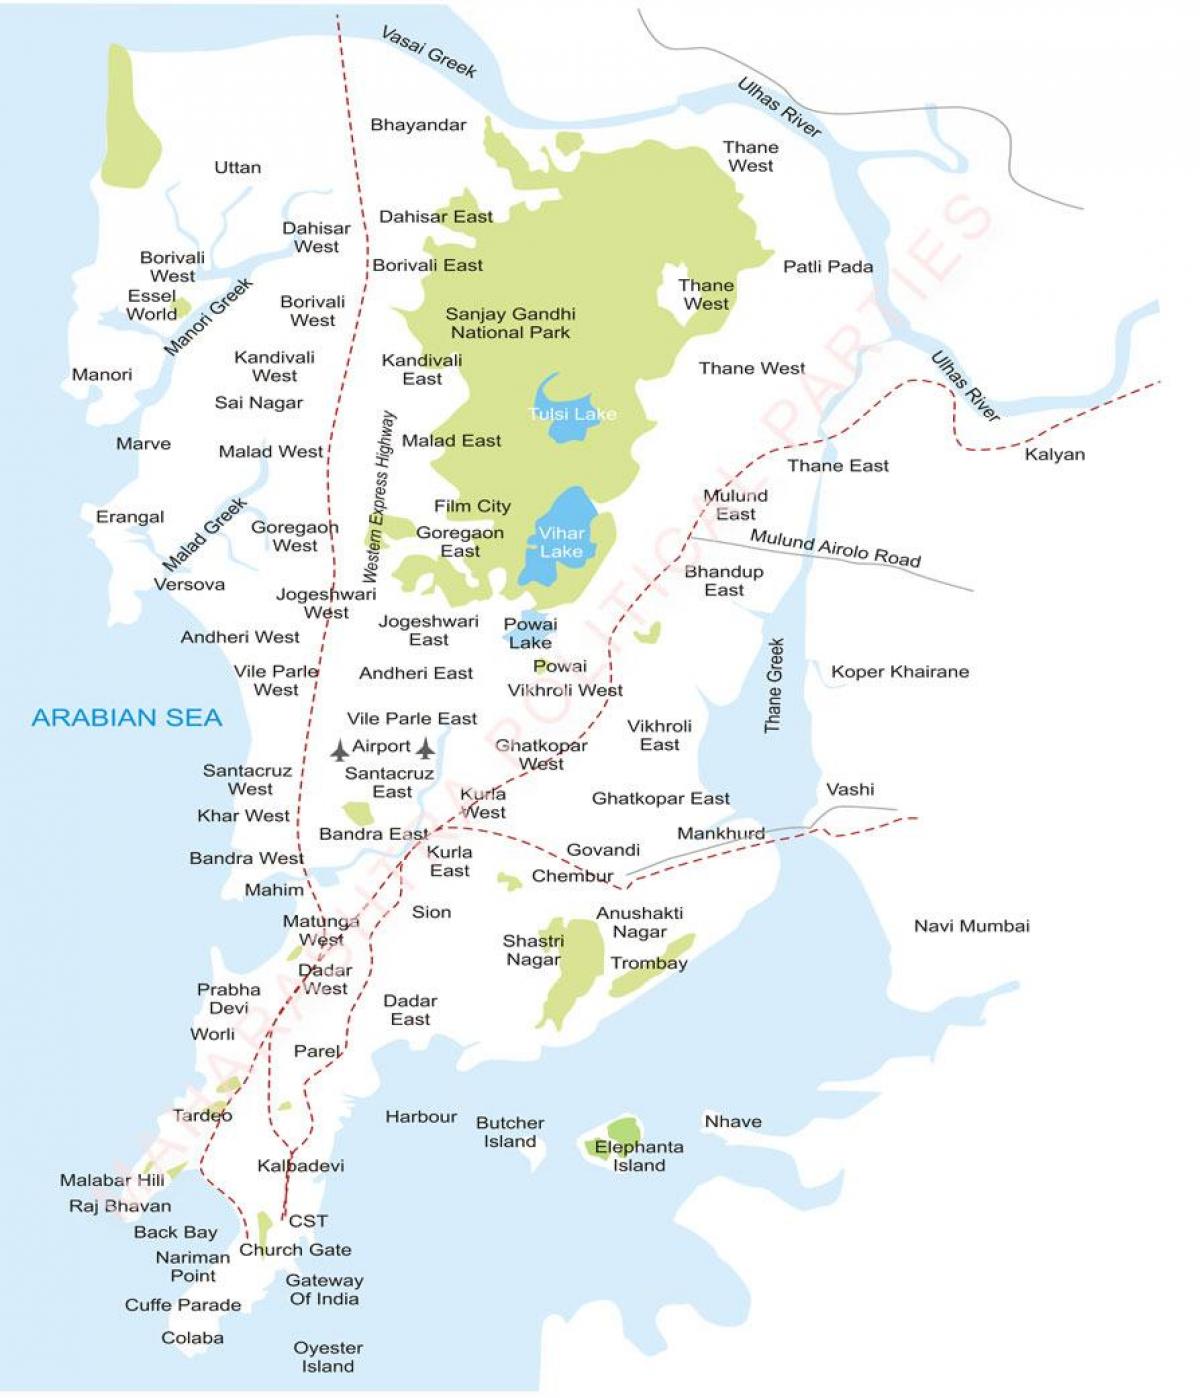 Мумбай предградие на картата